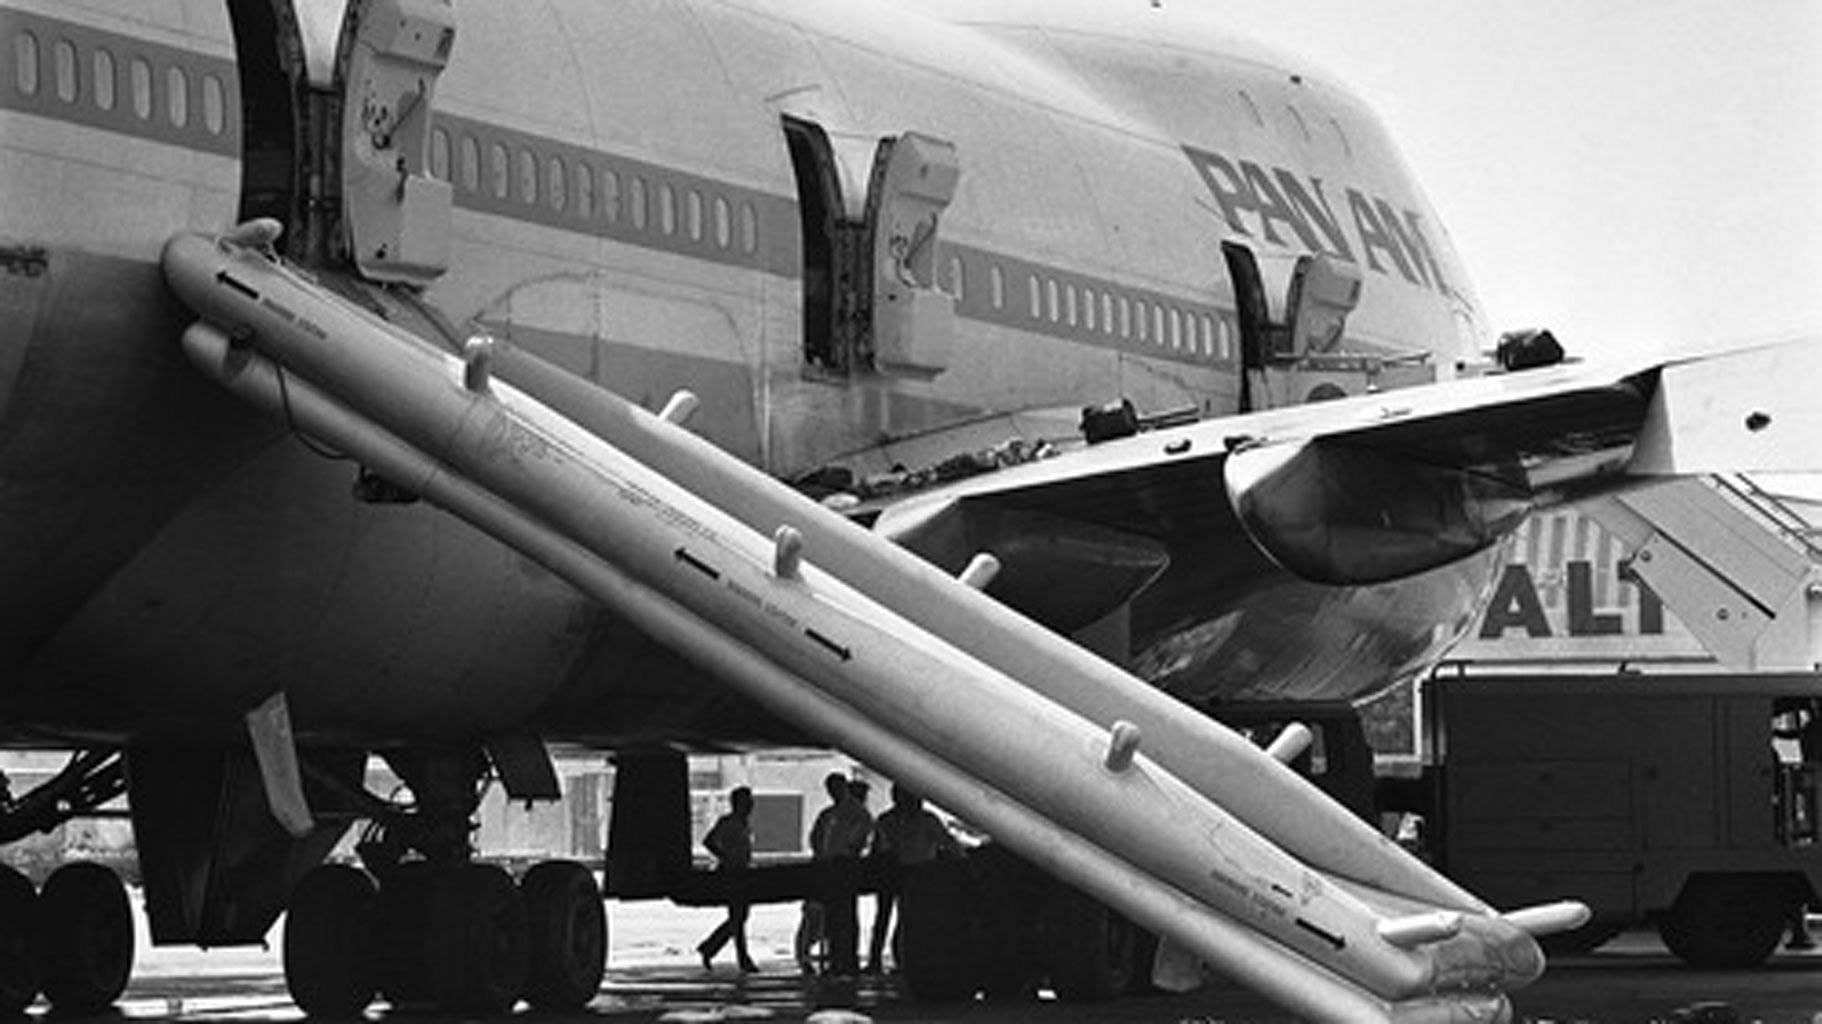 Pakistani policemen investigate the Pan Am jetliner under the emergency chute in Karachi, Pakistan on Saturday morning, 6 September 1986. (Photo: AP)